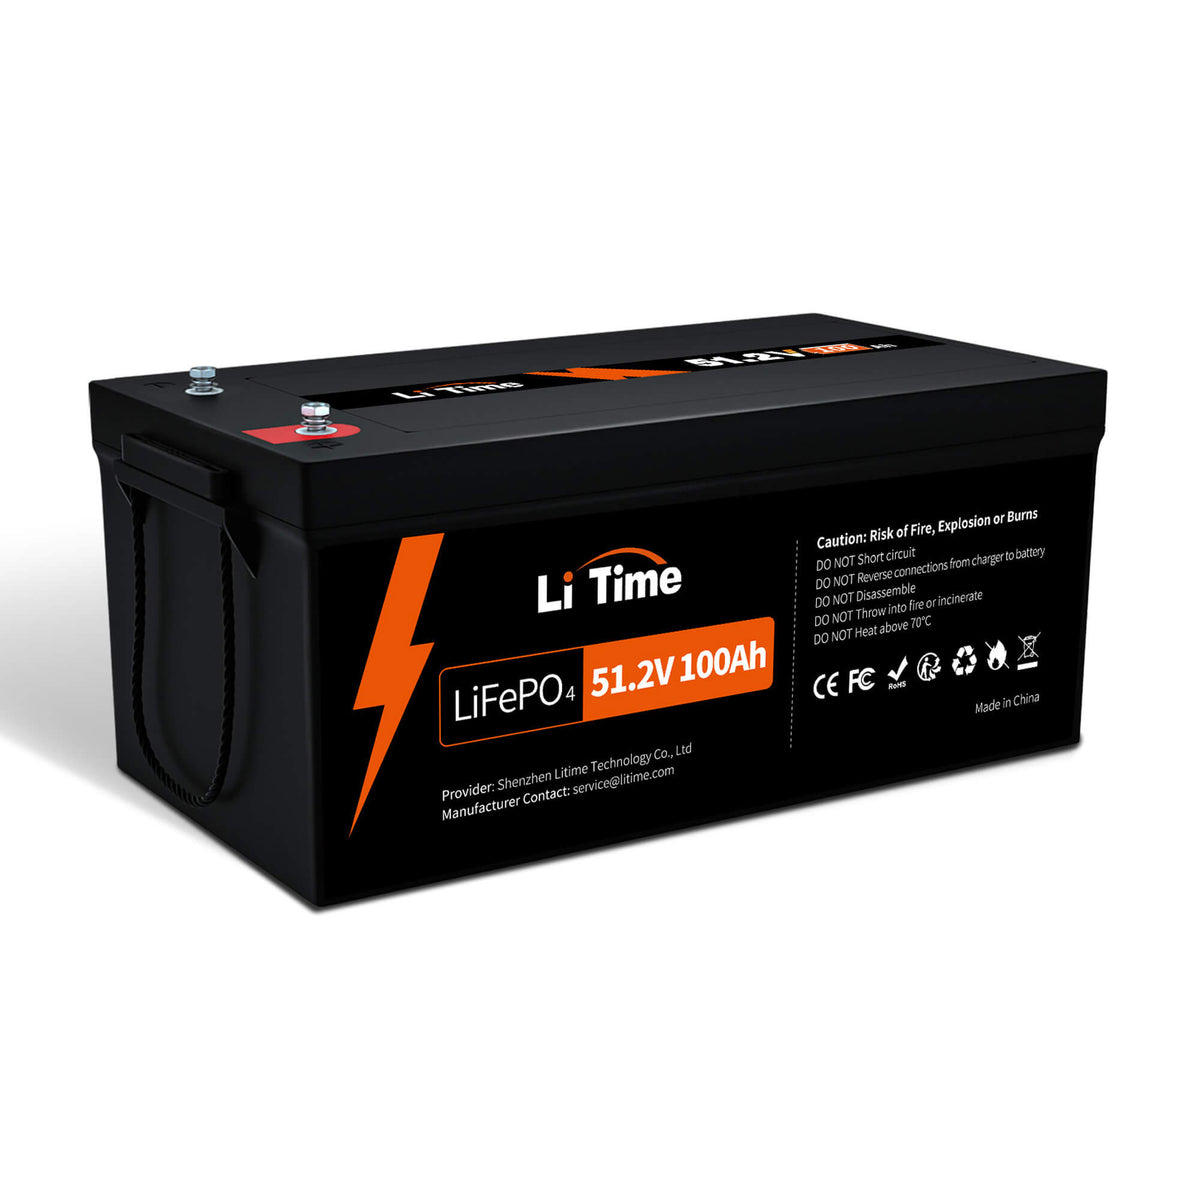 【0% MwSt.】LiTime 51,2V 100Ah LiFePO4 Batterie mit 64 Zellen